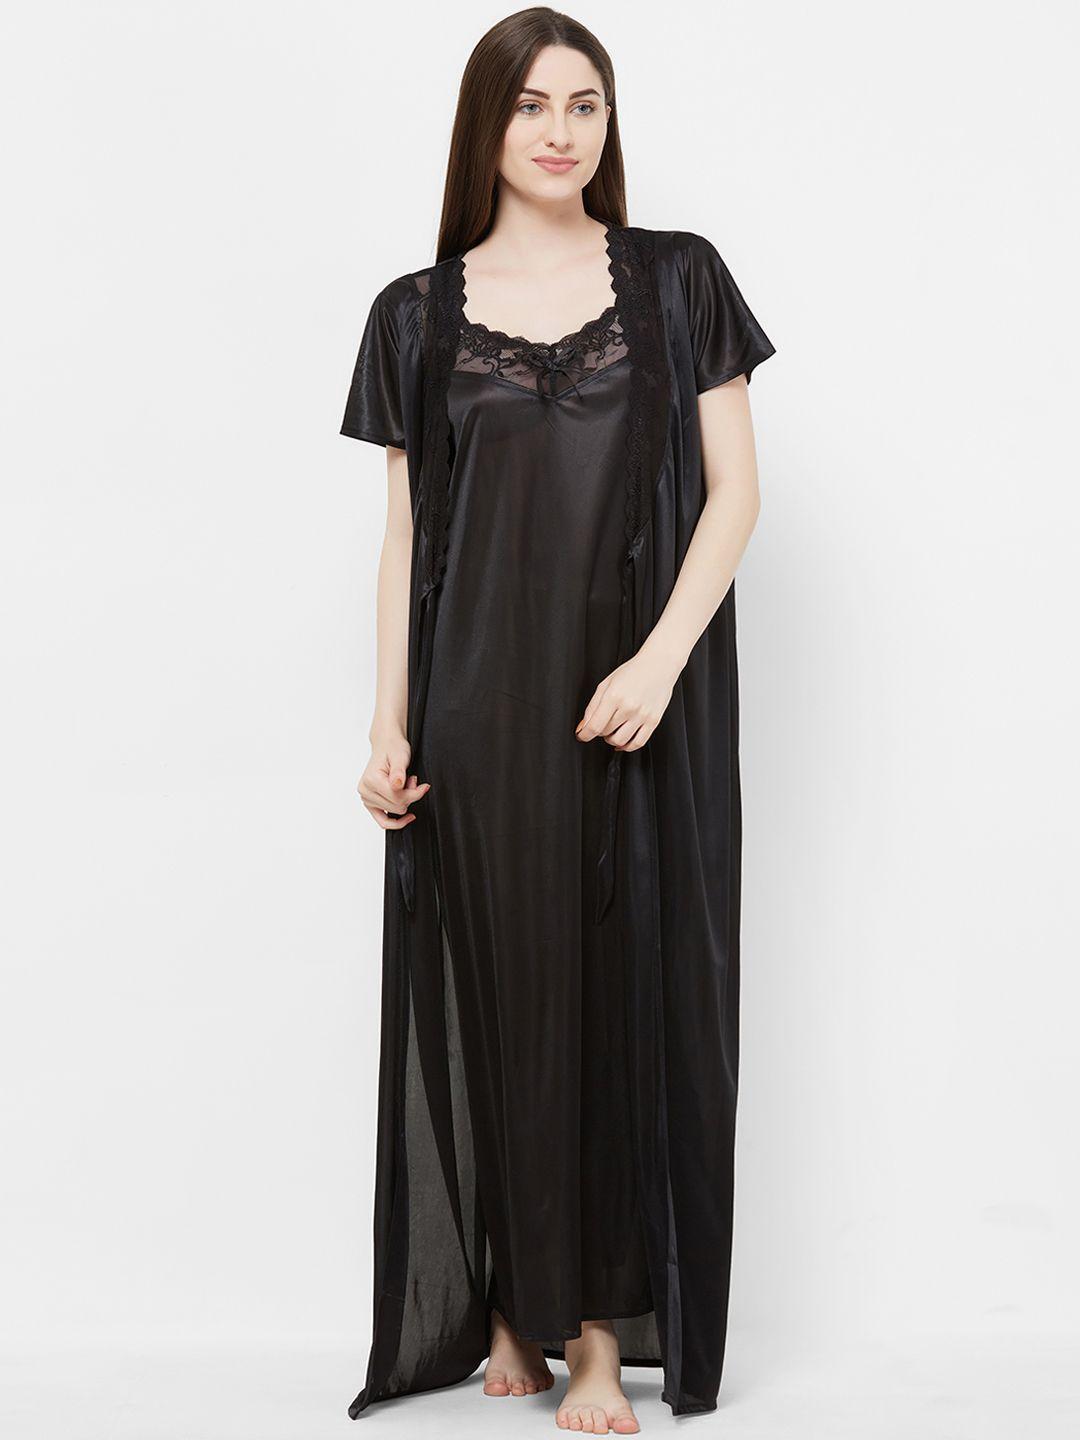 fashionrack-women-black-solid-nightdress